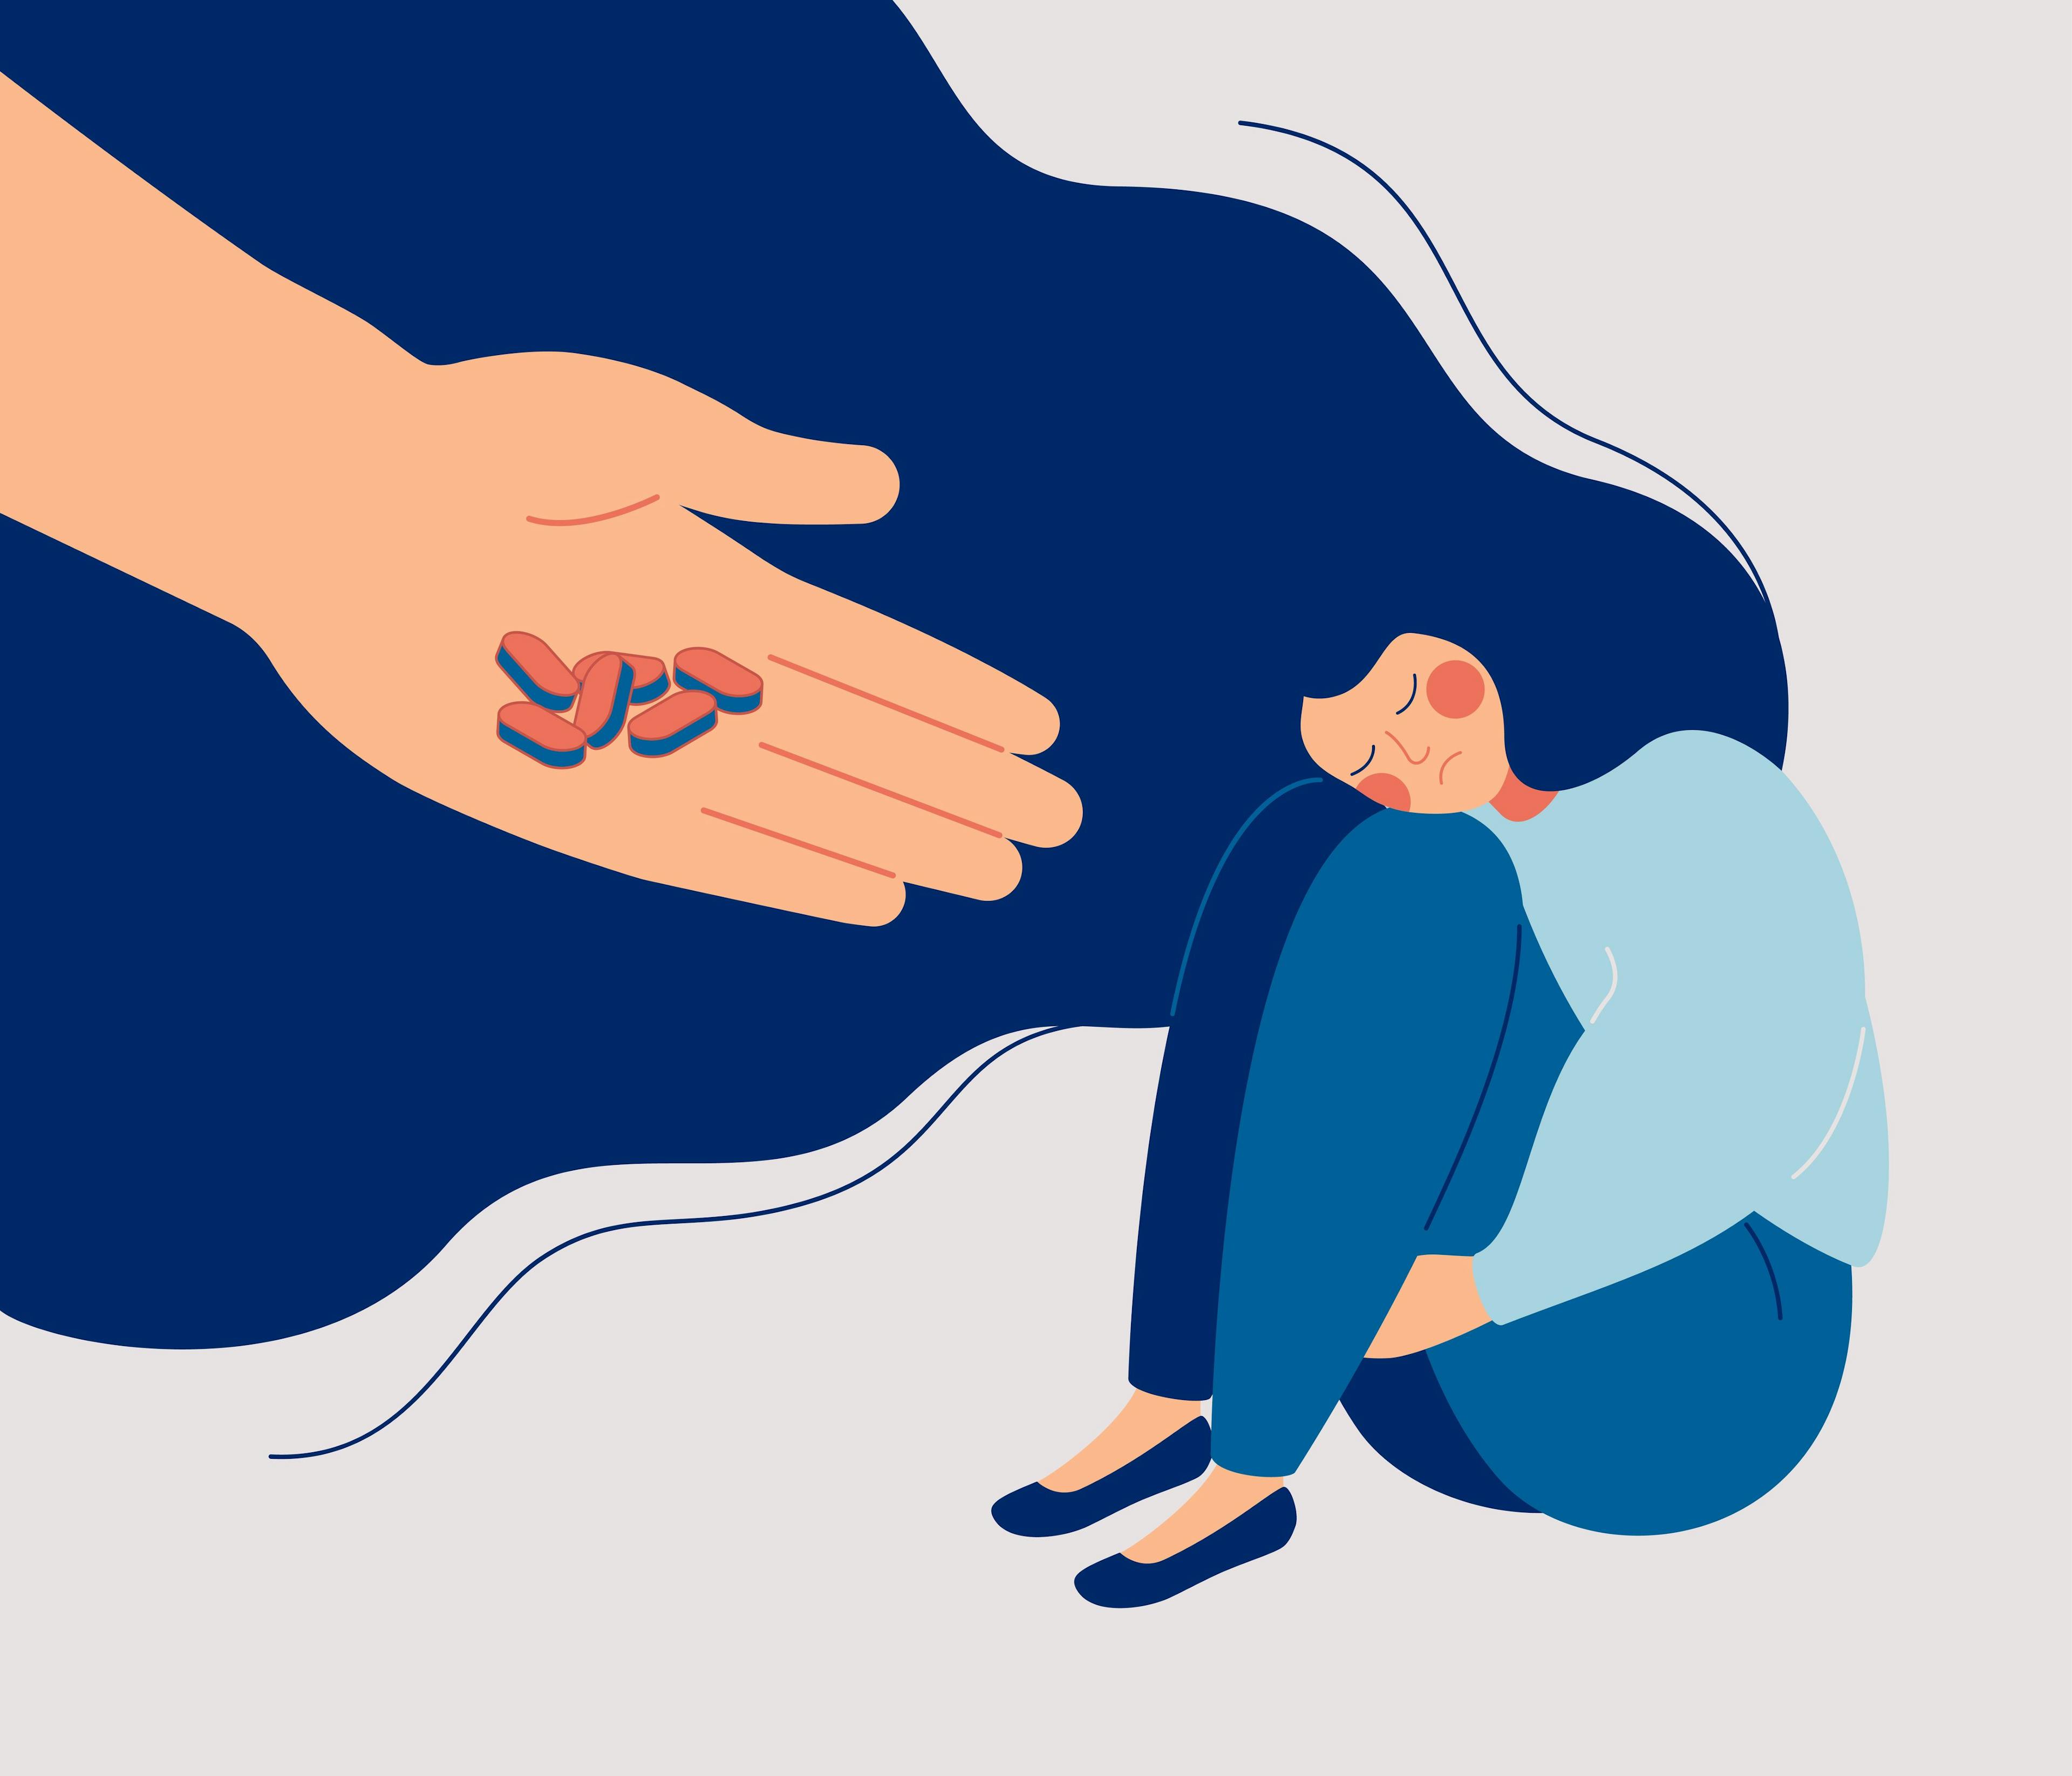 Illustration of woman receiving antidepressants / Mary Long - stock.adobe.com